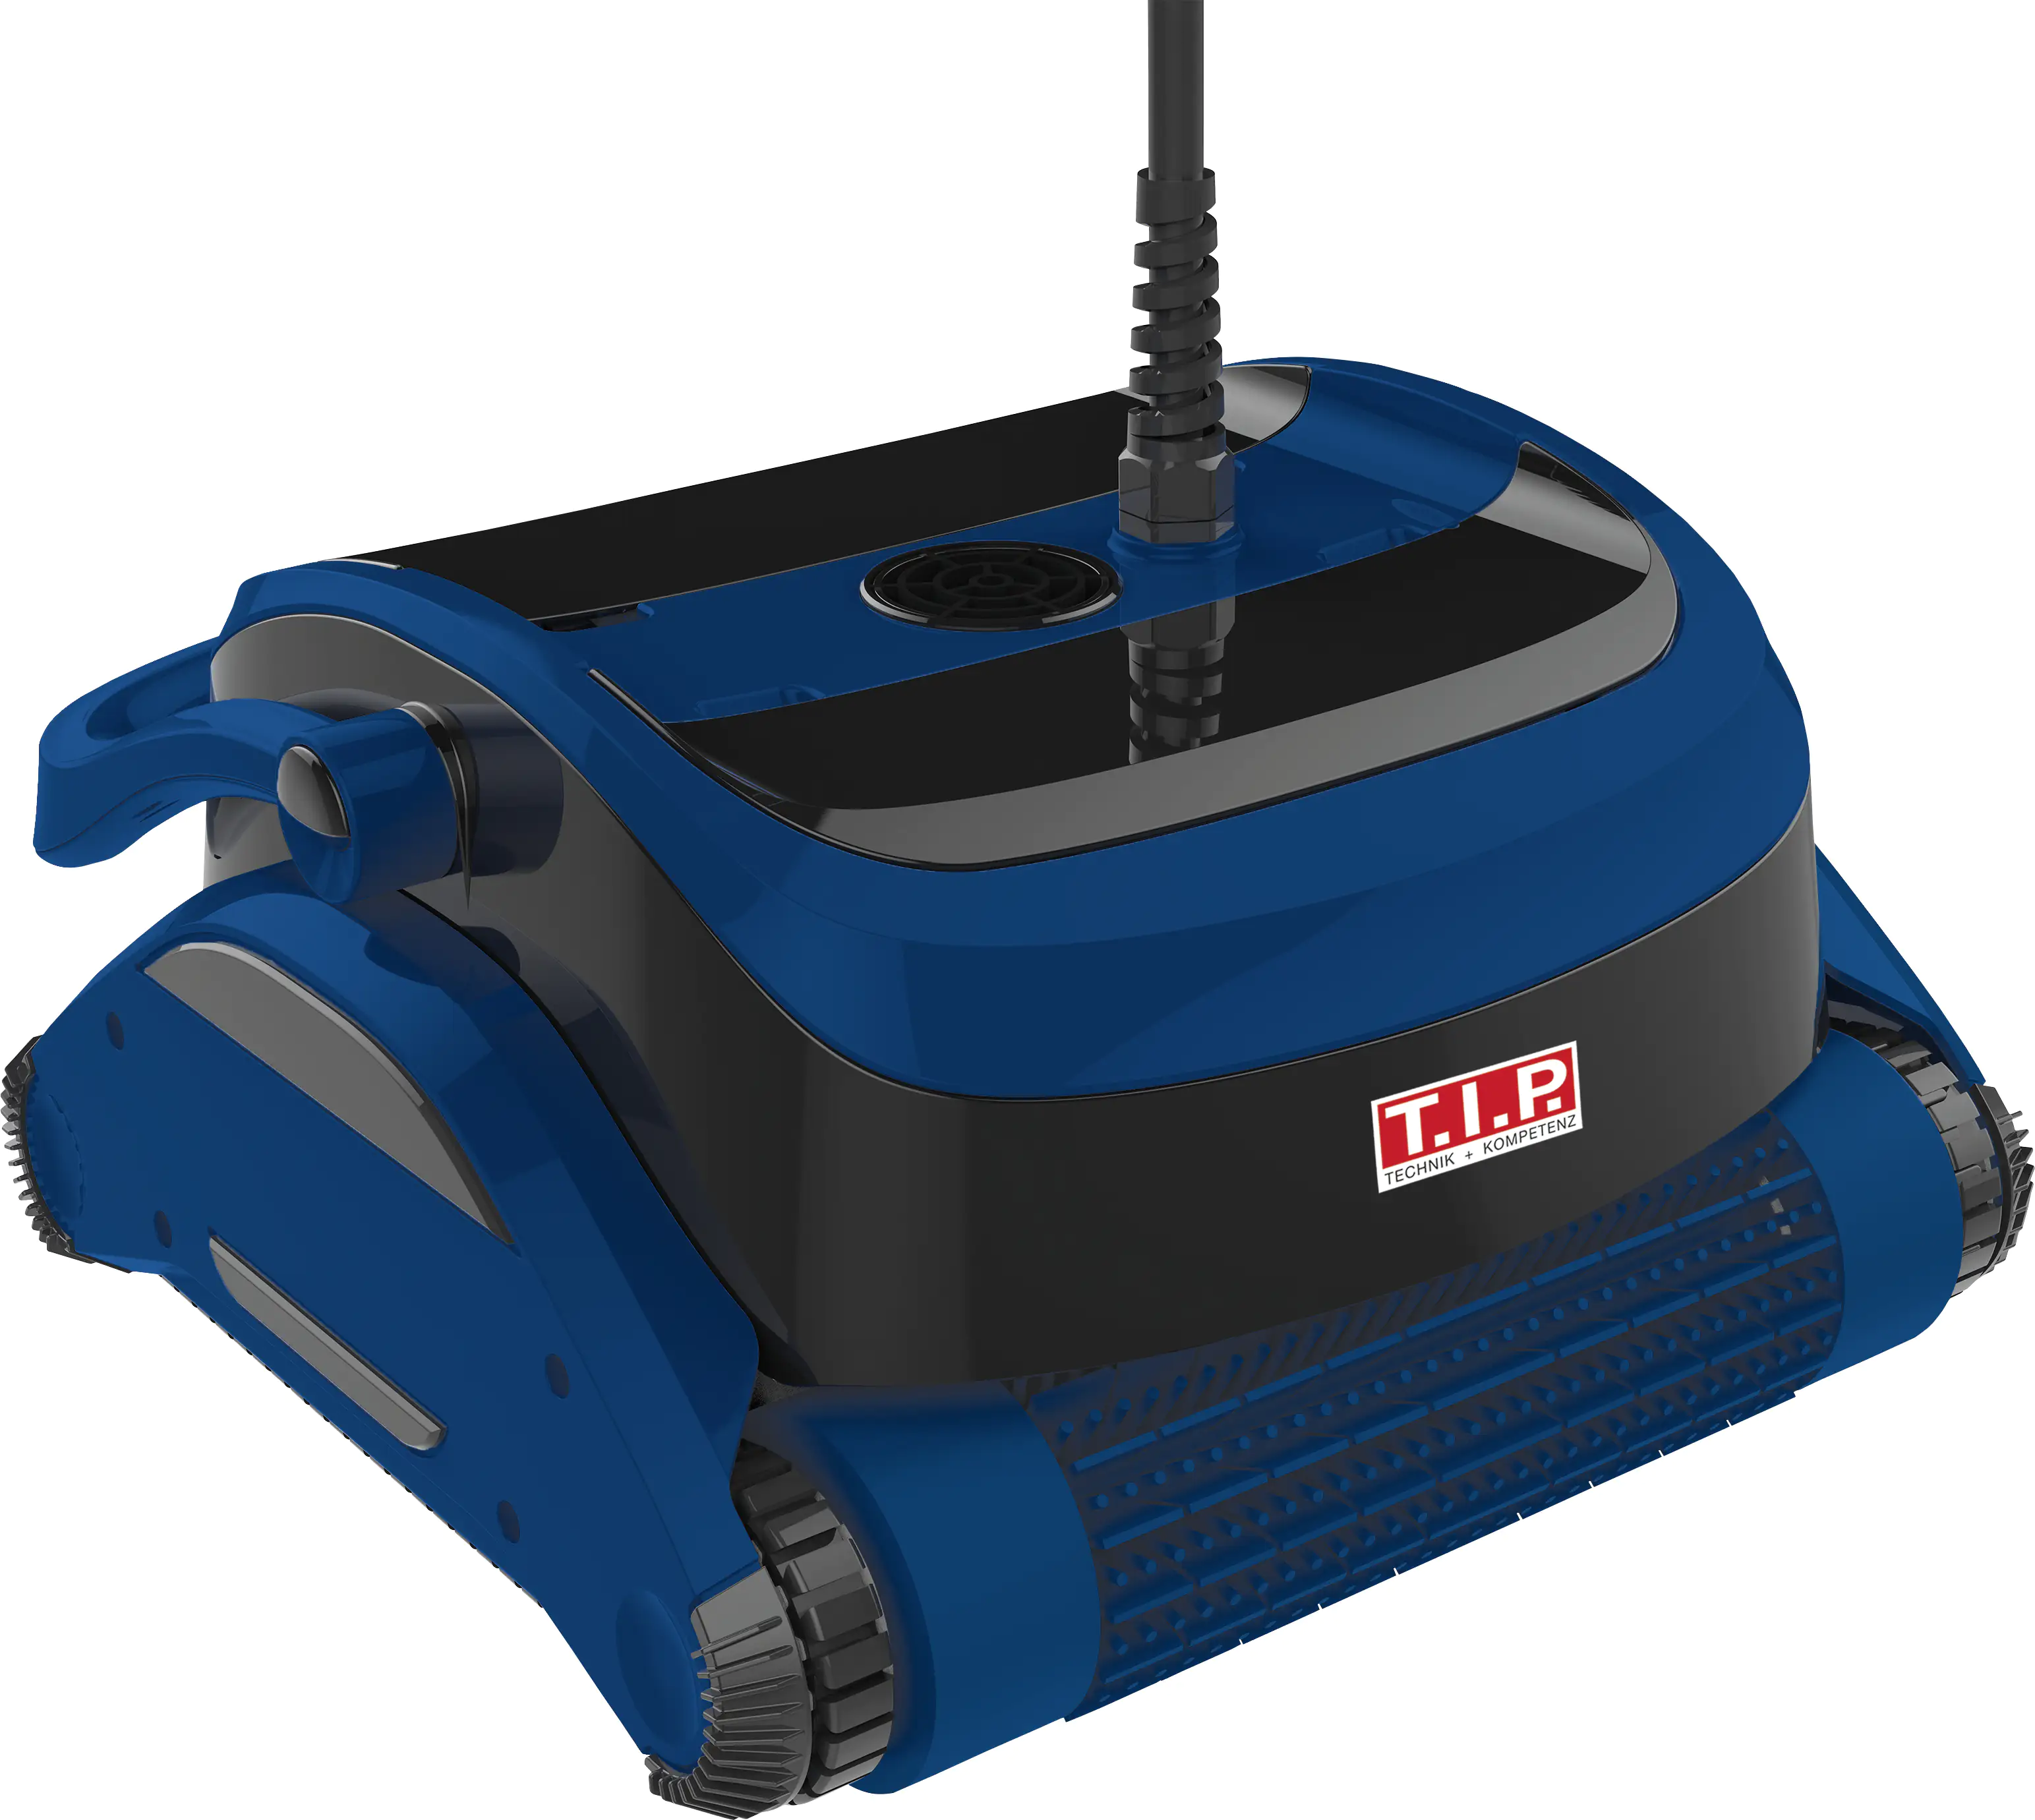 T.I.P. Poolroboter Sweeper 18000 kaufen 3D | schwarz/blau Baumarkt Globus